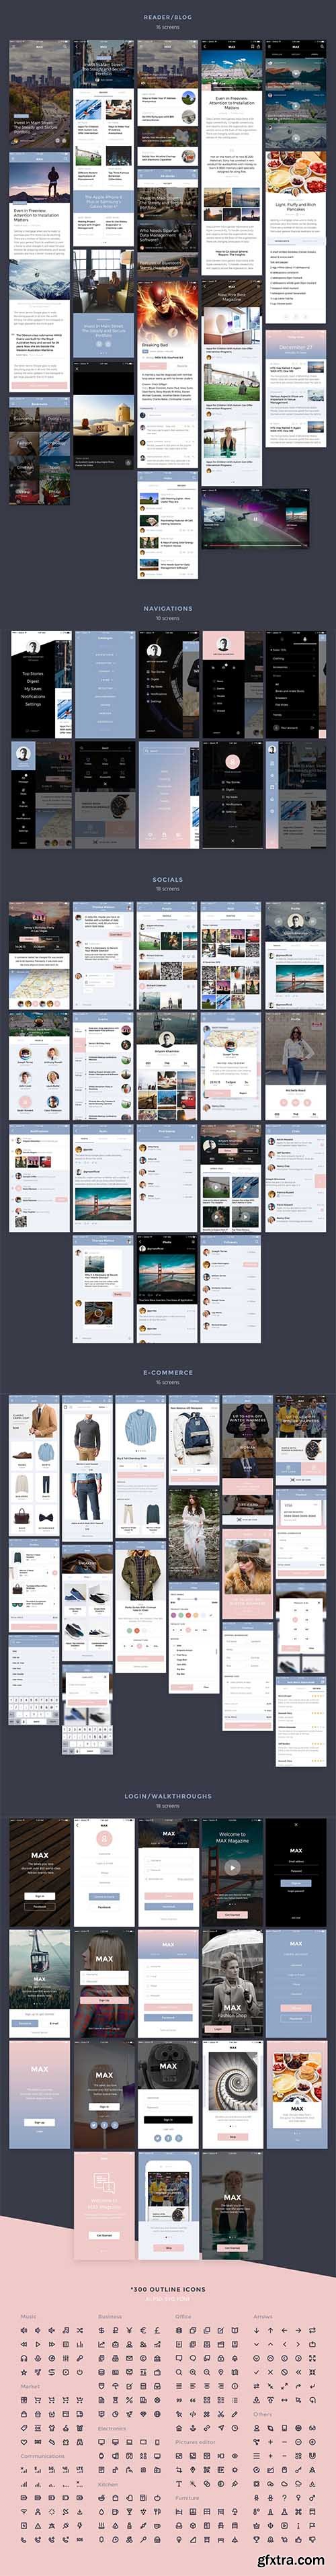 MAX UI Kit - Mobile UI Kit with 300 outline icons & Pantone colors 2016